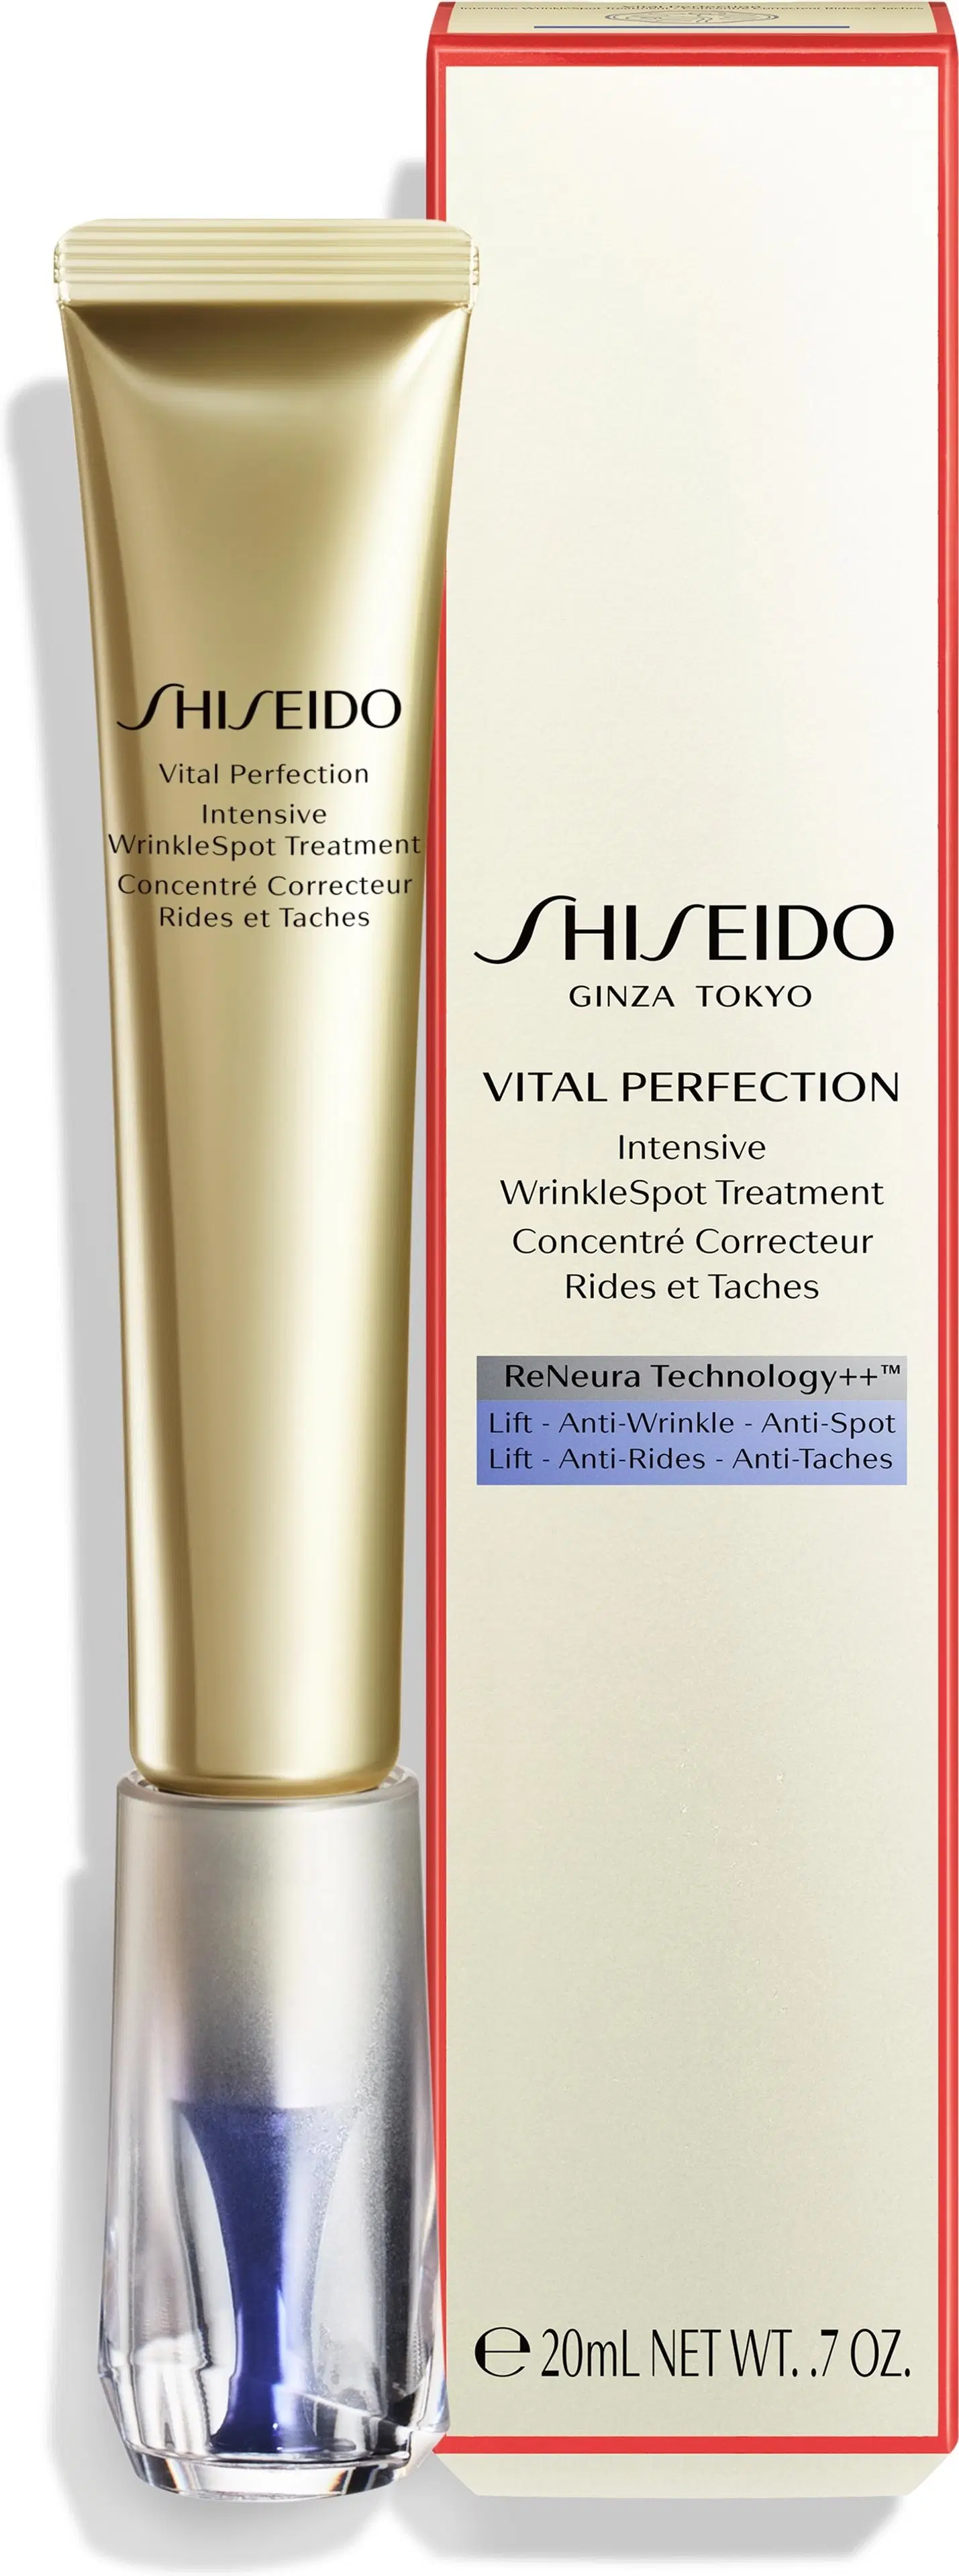 Shiseido Vital Perfection Intensive Wrinklespot Treatment tuote 20 ml